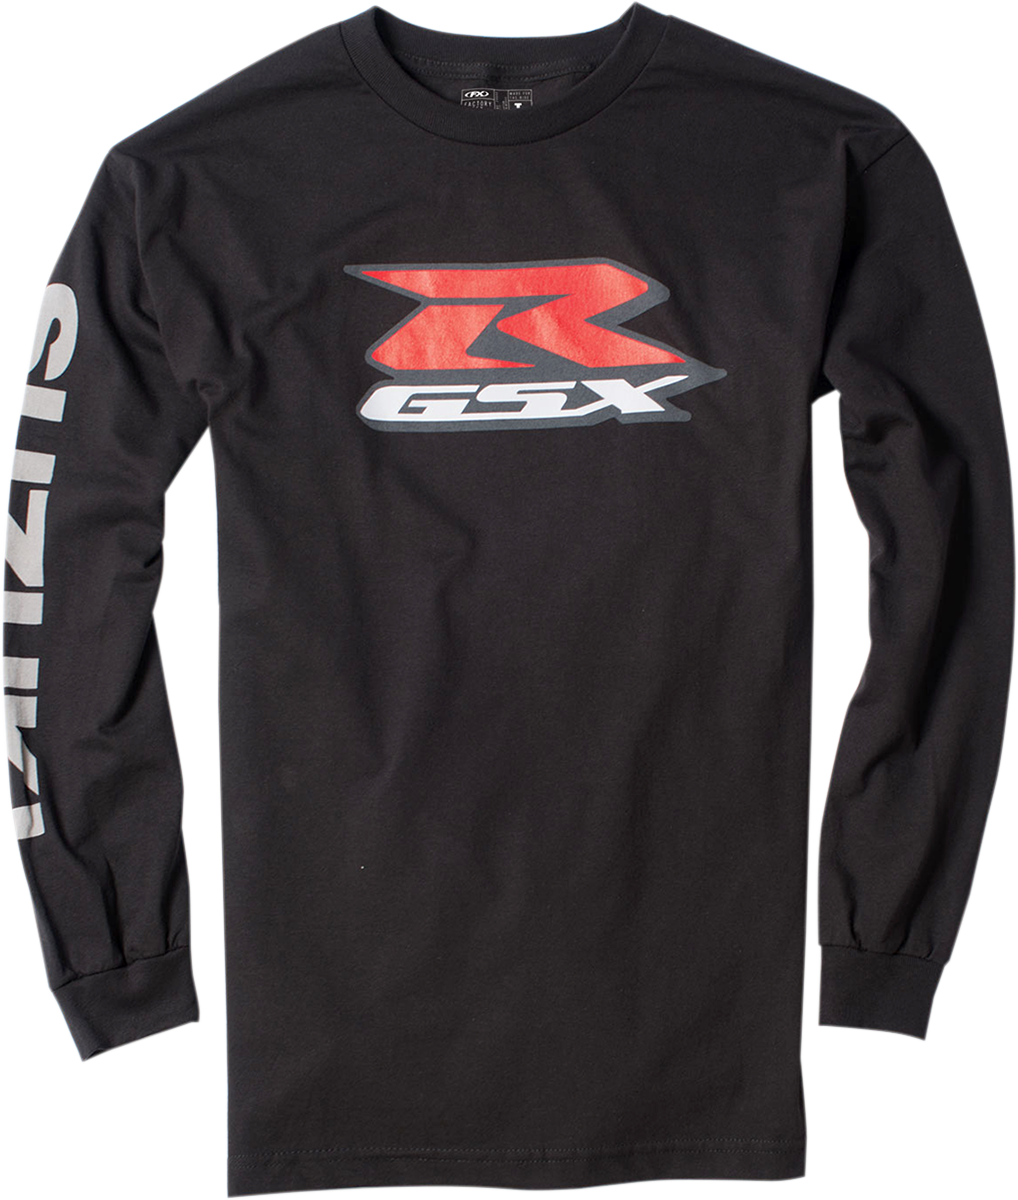 FACTORY EFFEX Suzuki GSXR Long-Sleeve T-Shirt - Black - Large 17-87414